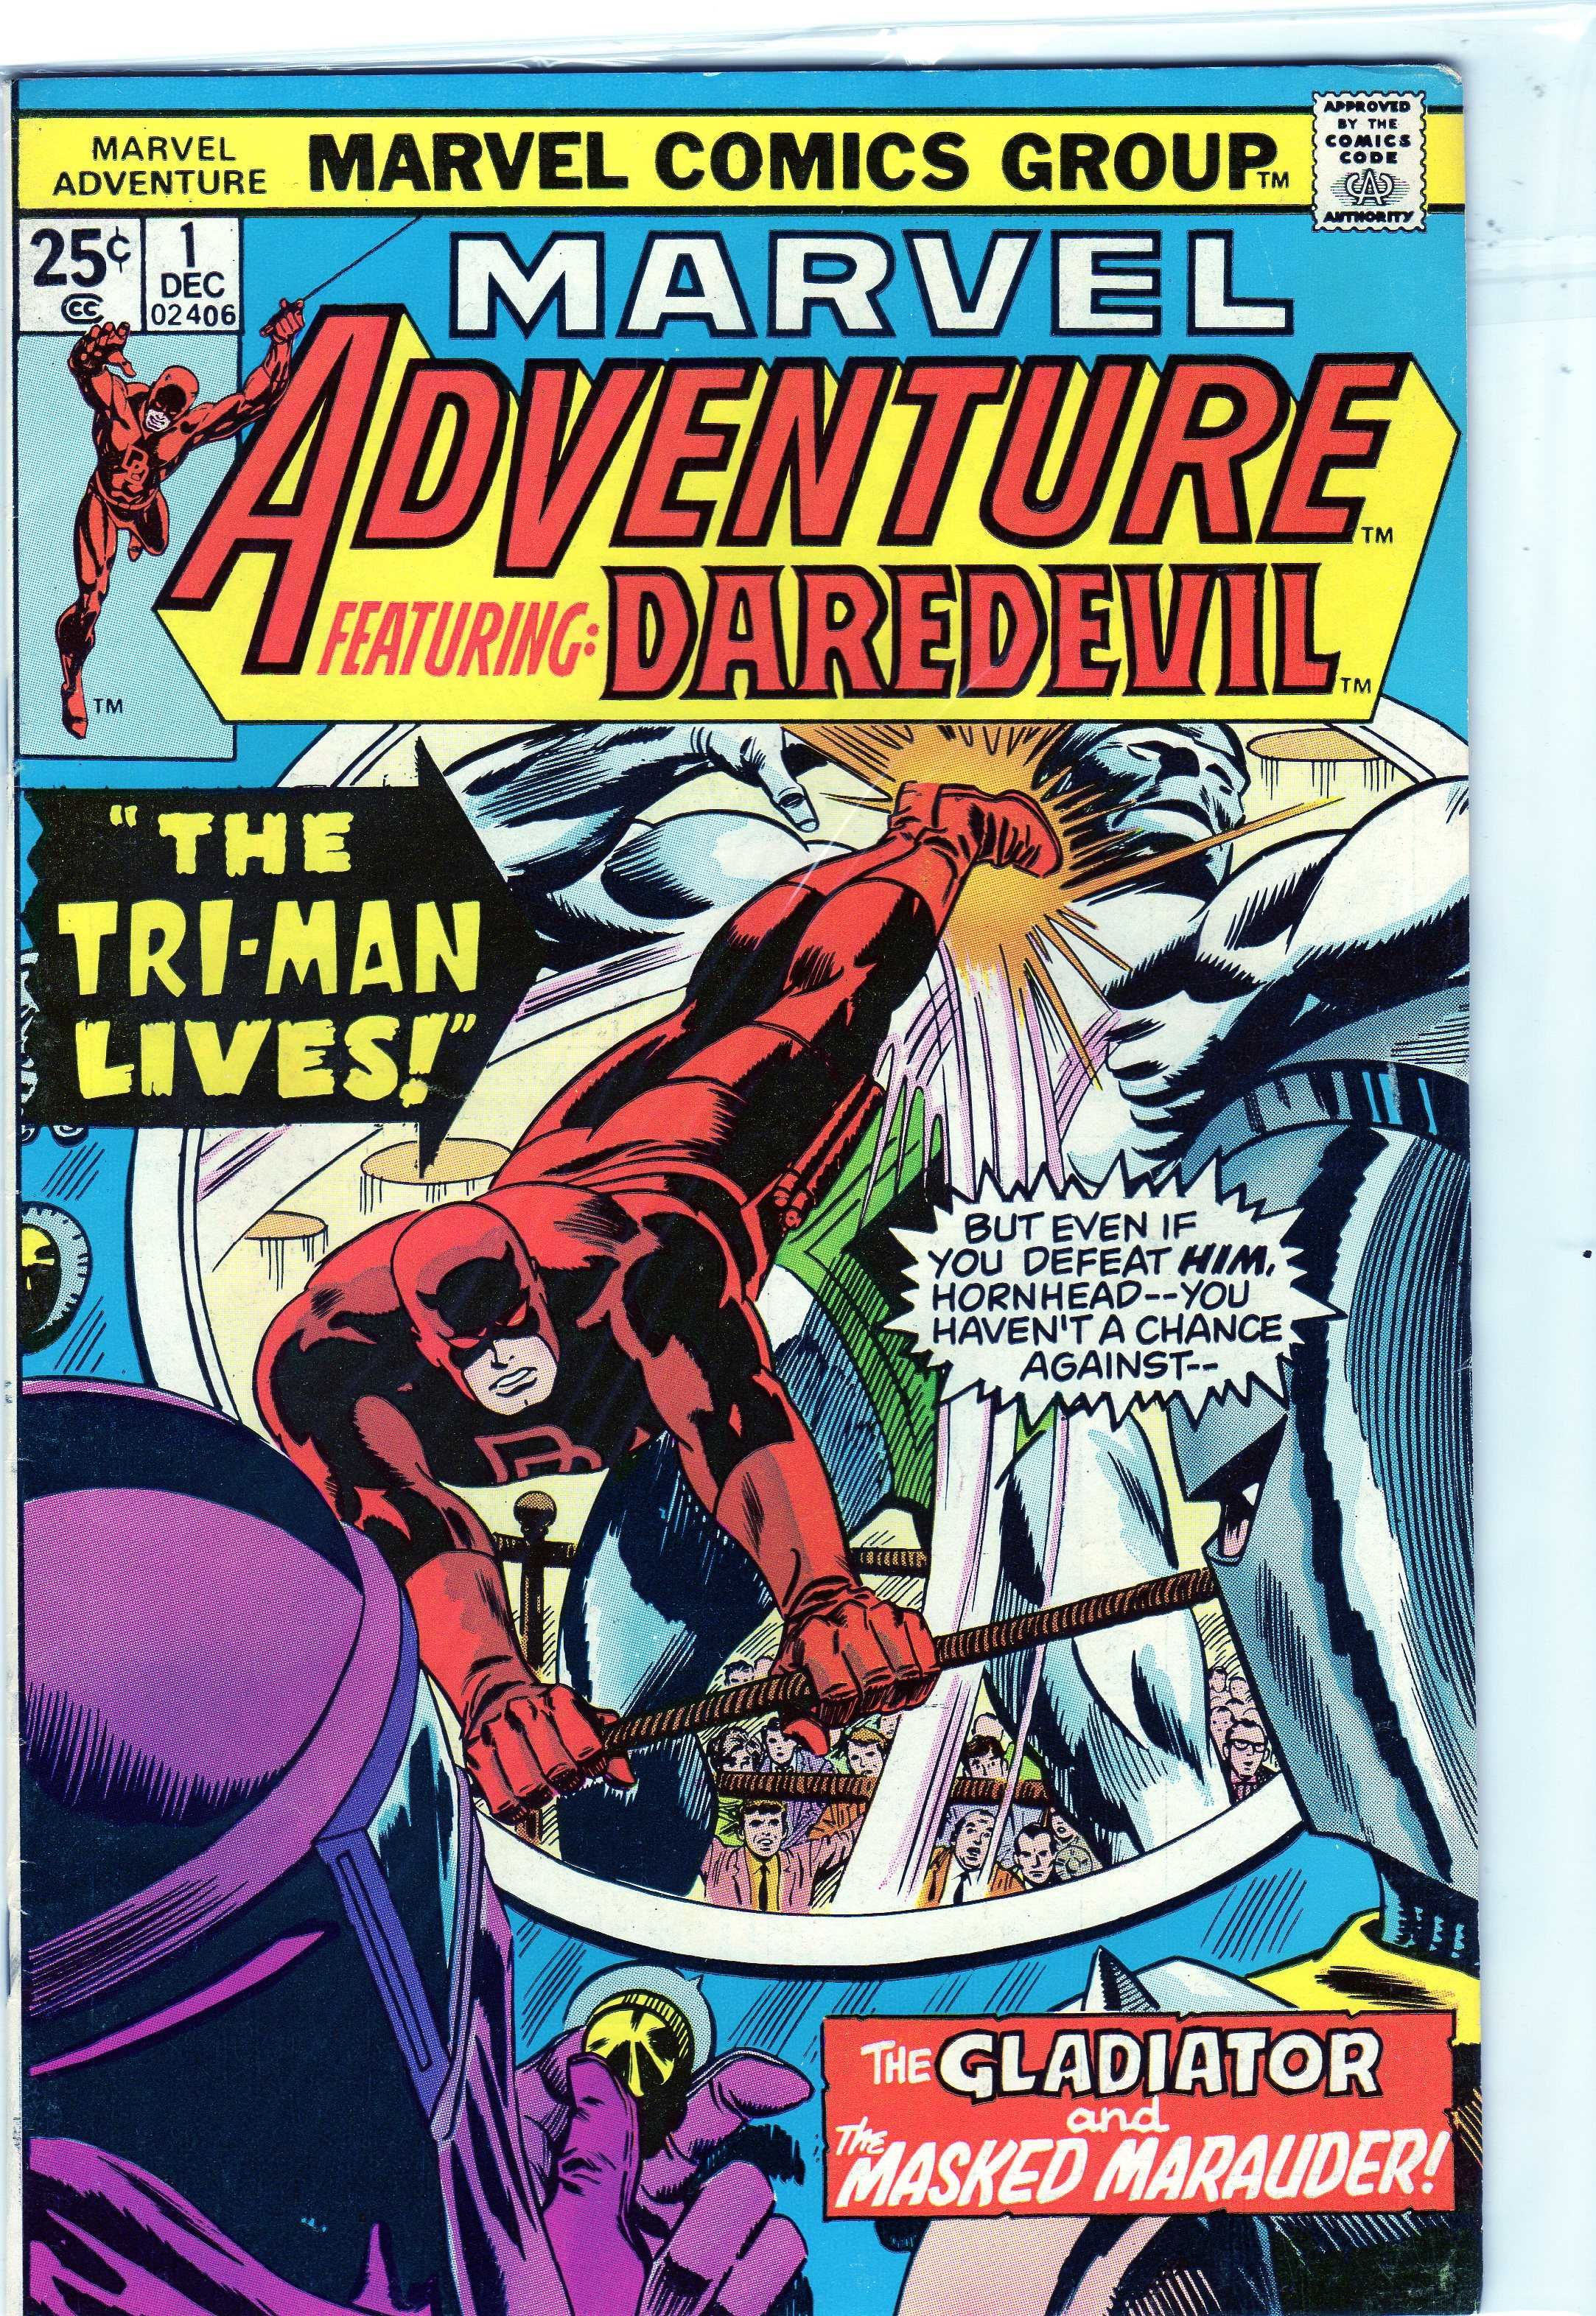 Marvel Adventure featuring Daredevil #1 Marvel Comics 1975 benzi desen